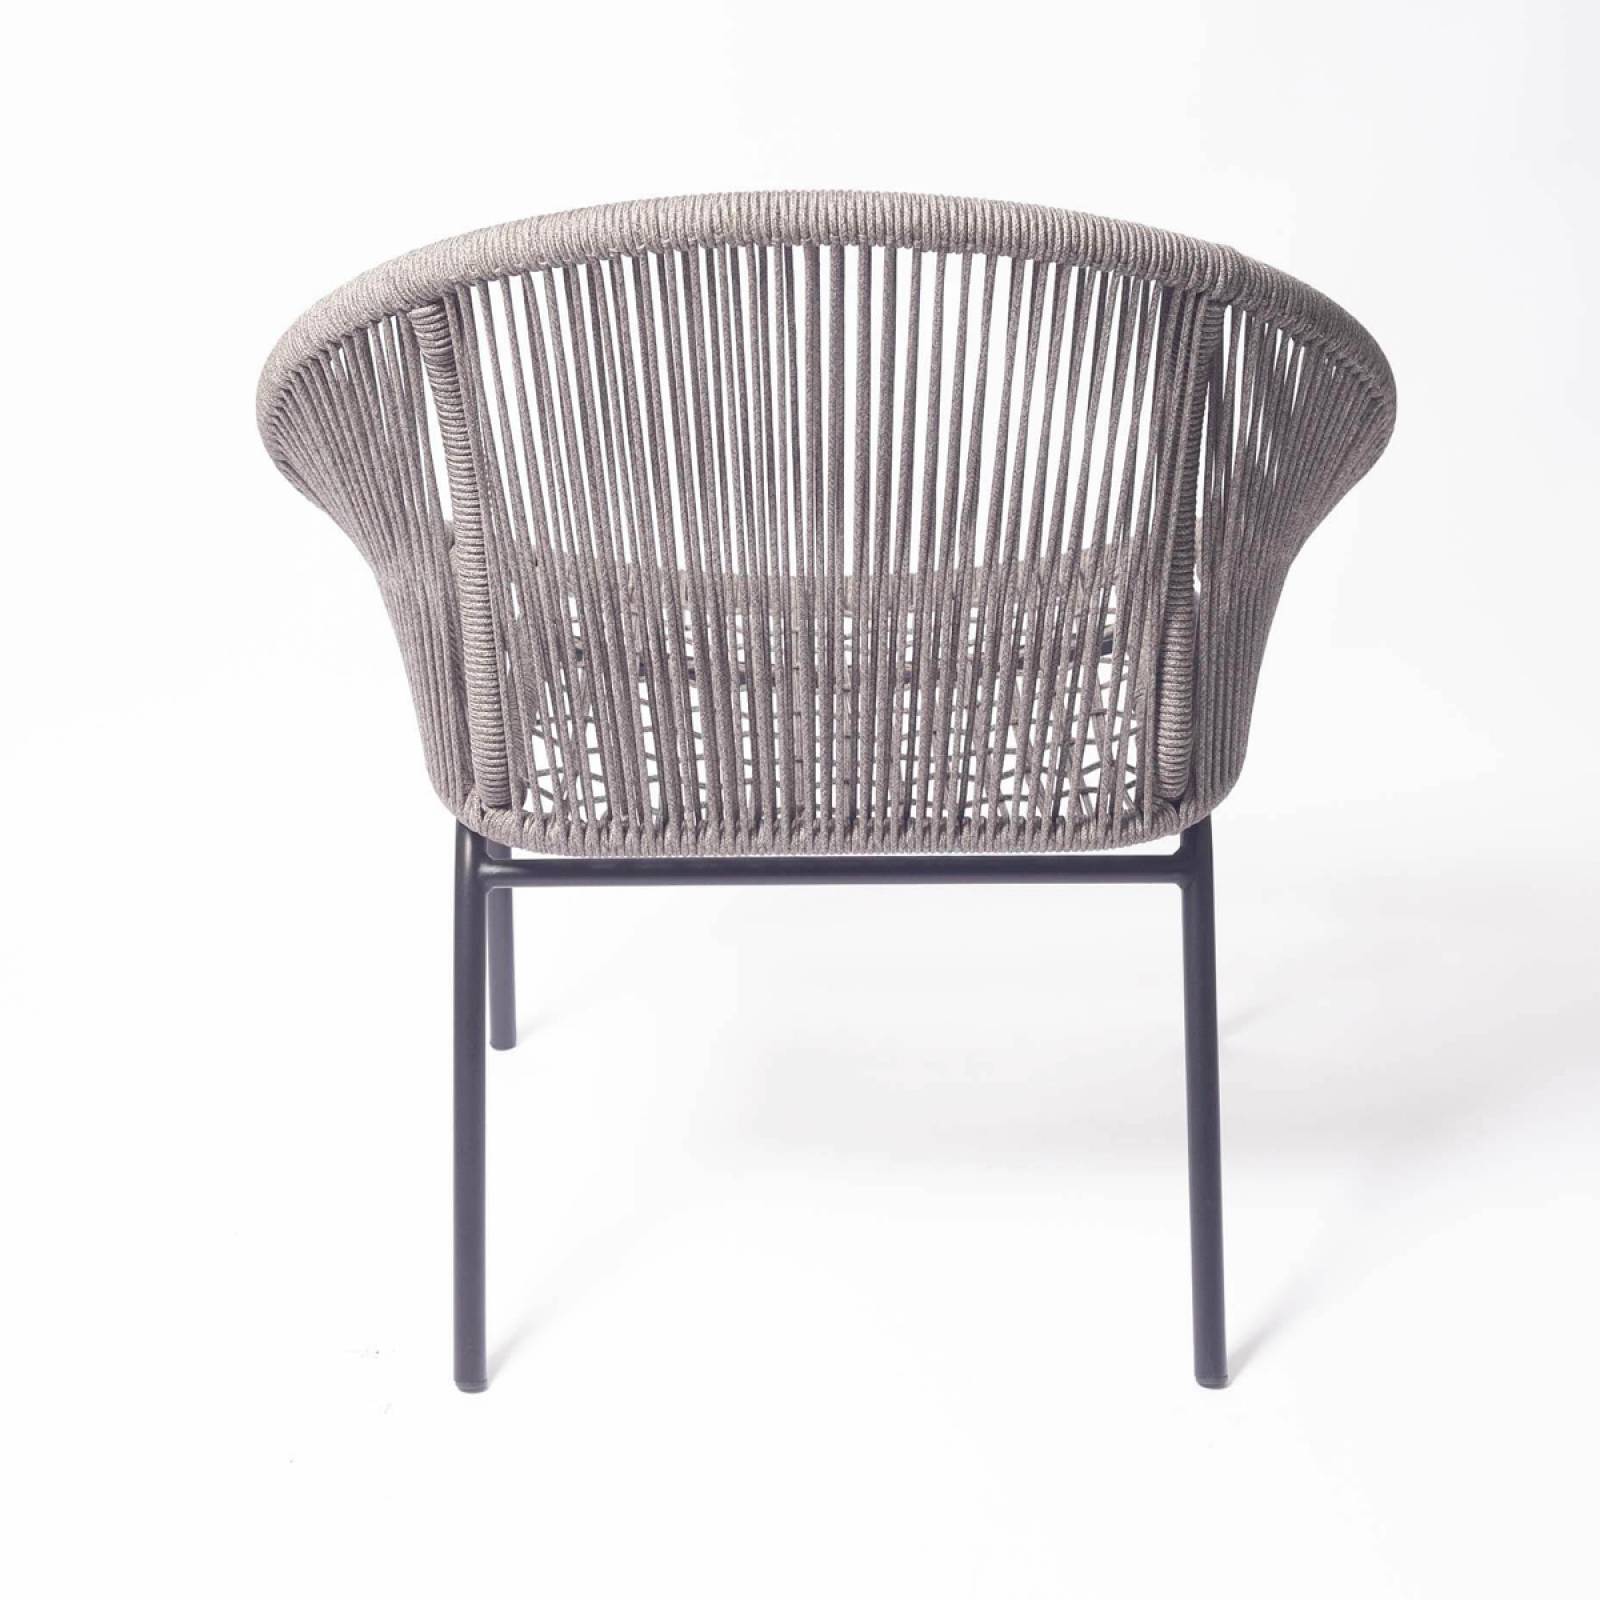 Laria String Garden Chair In Grey thumbnails